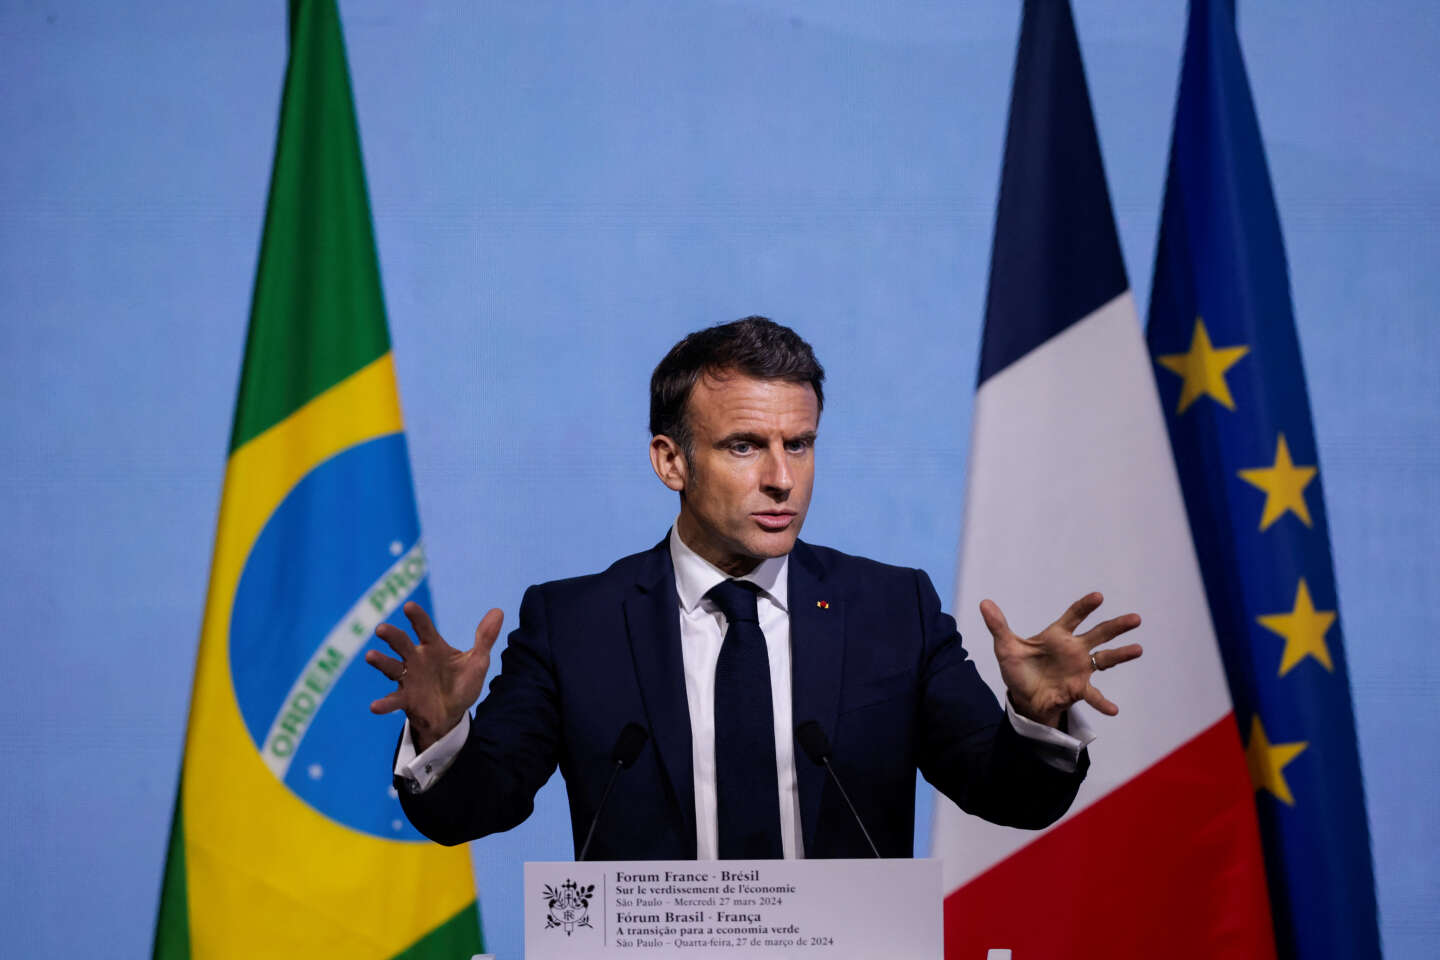 Accordo UE-Mercosur “pessimo”, dice Emmanuel Macron in Brasile, “costruiamone uno nuovo”